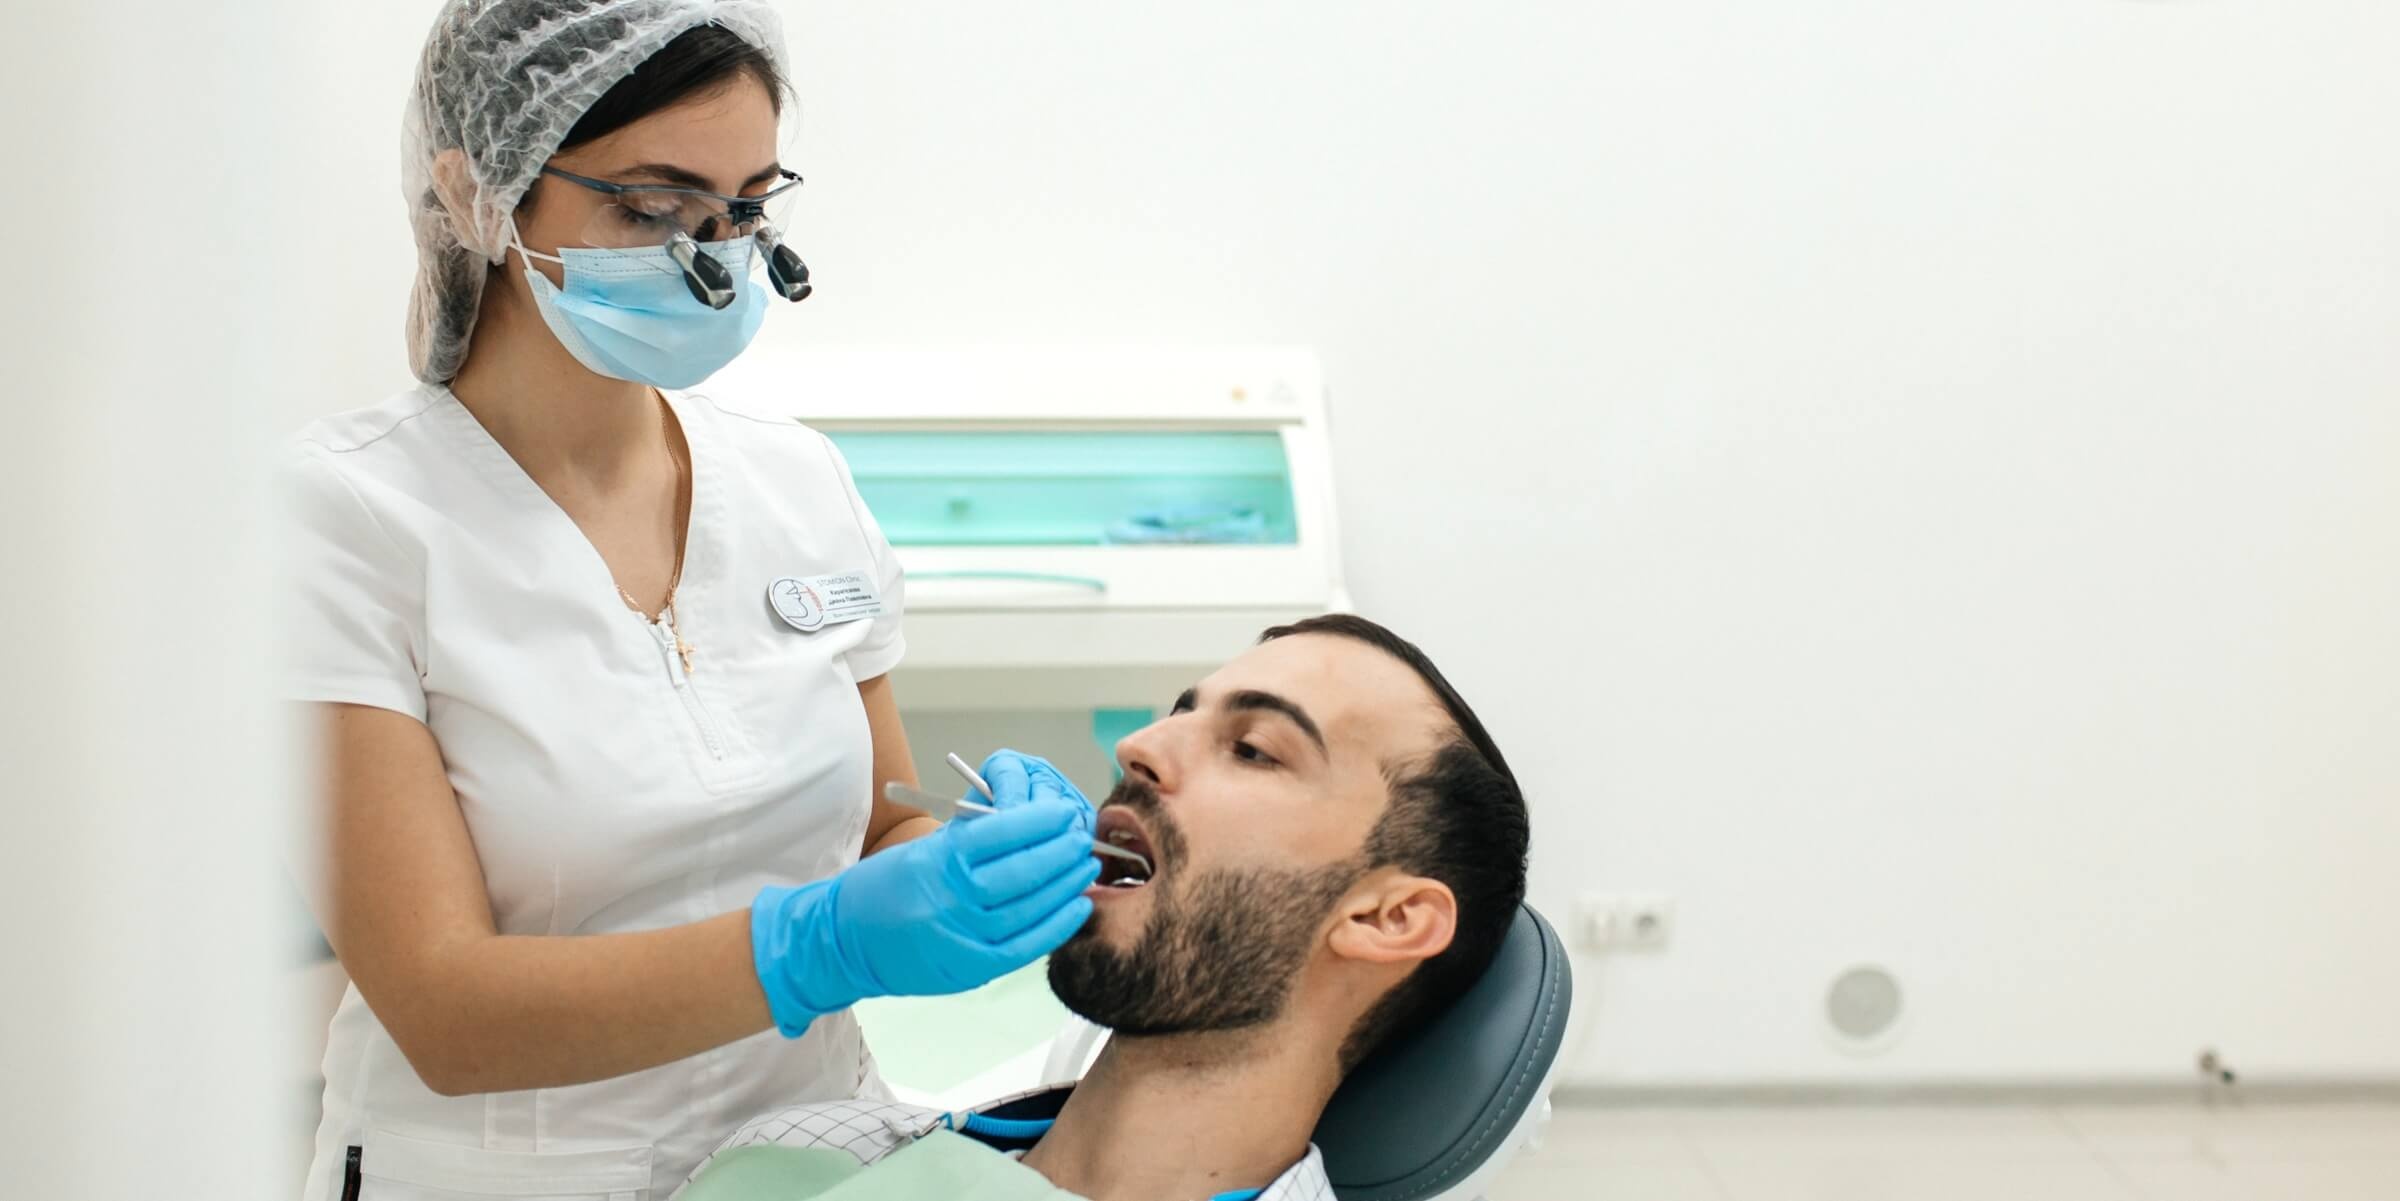 Стоматолог хирург проводит трансплантацию зуба